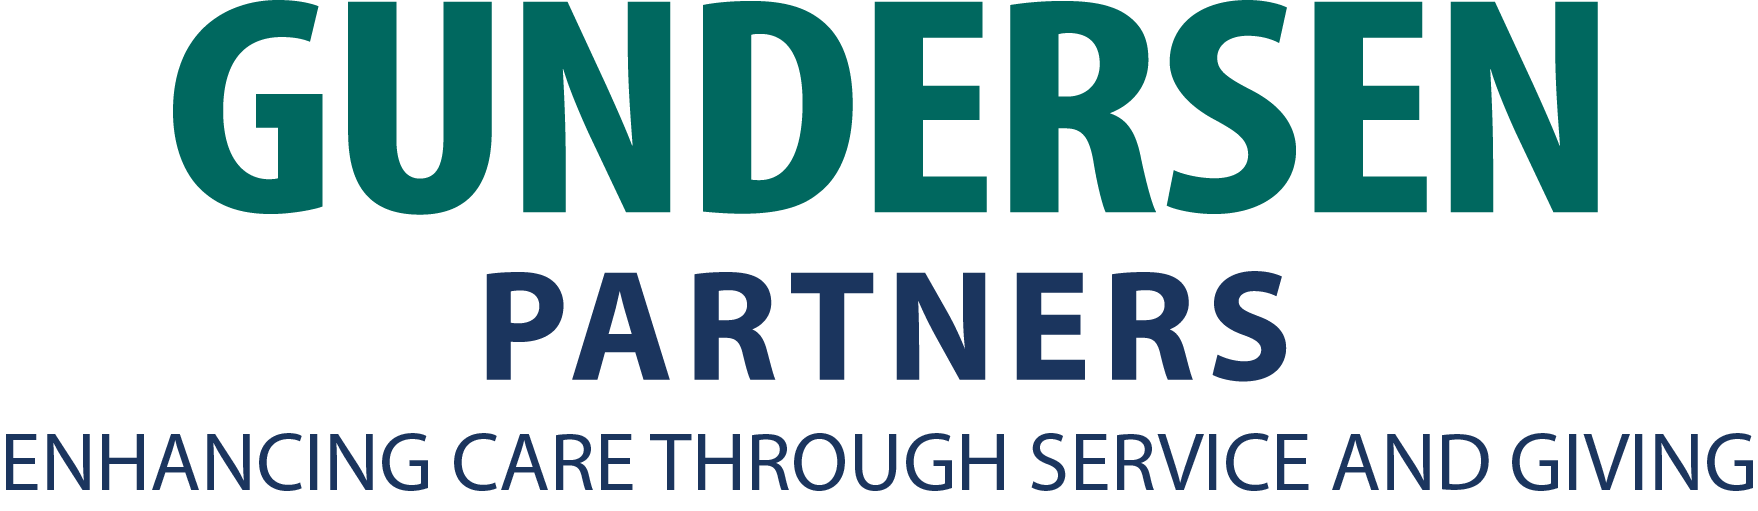 NEW Gundersen Partners~2019 Logo - TRANSPARENT BACKGROUND